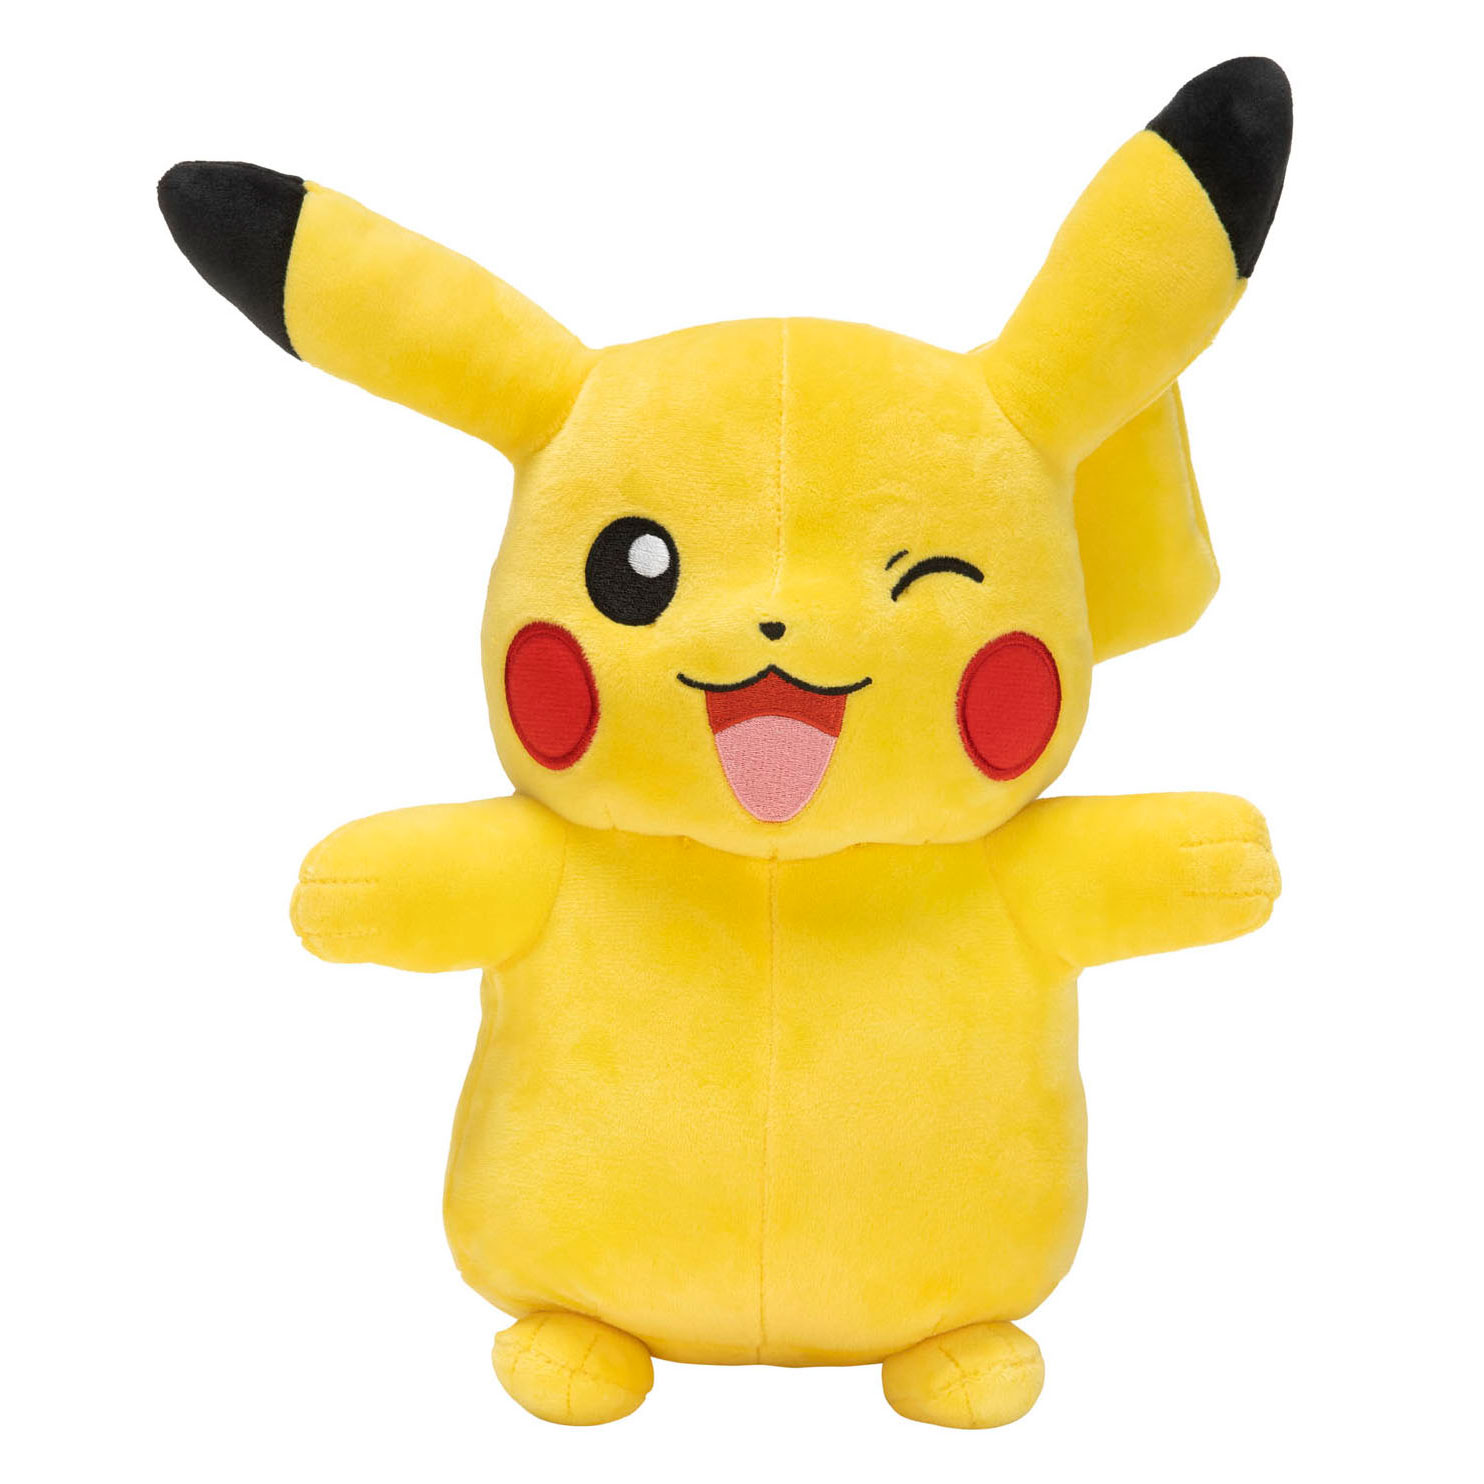 Pokemon Pluchen Knuffel - Pikachu, 30cm